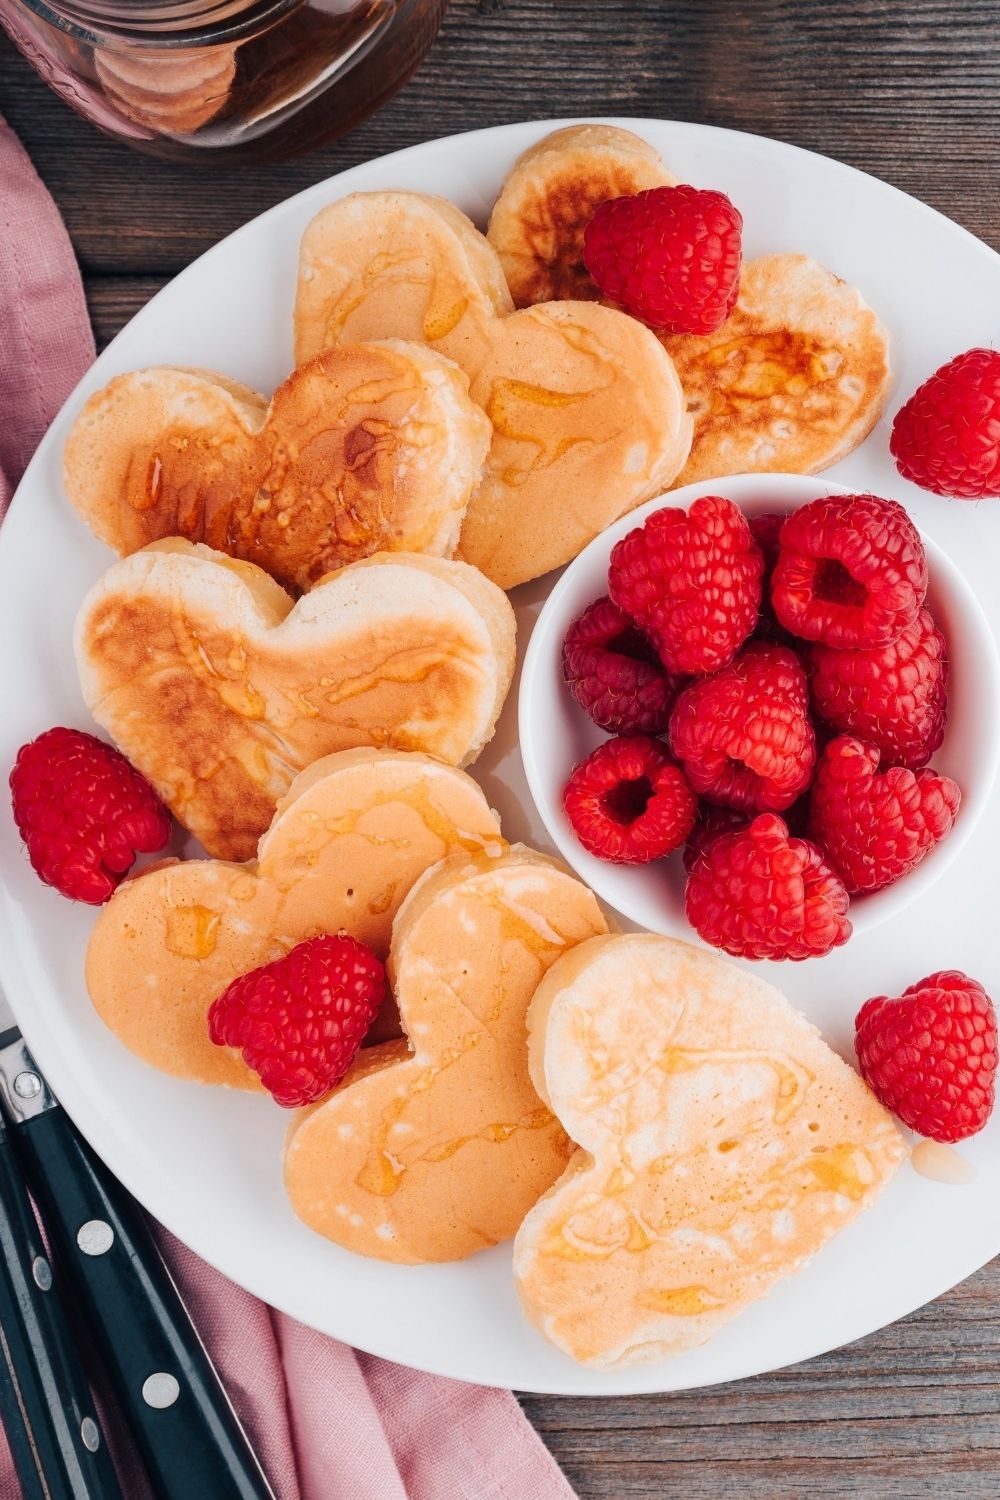 Heart Shaped Pancakes for Breakfast